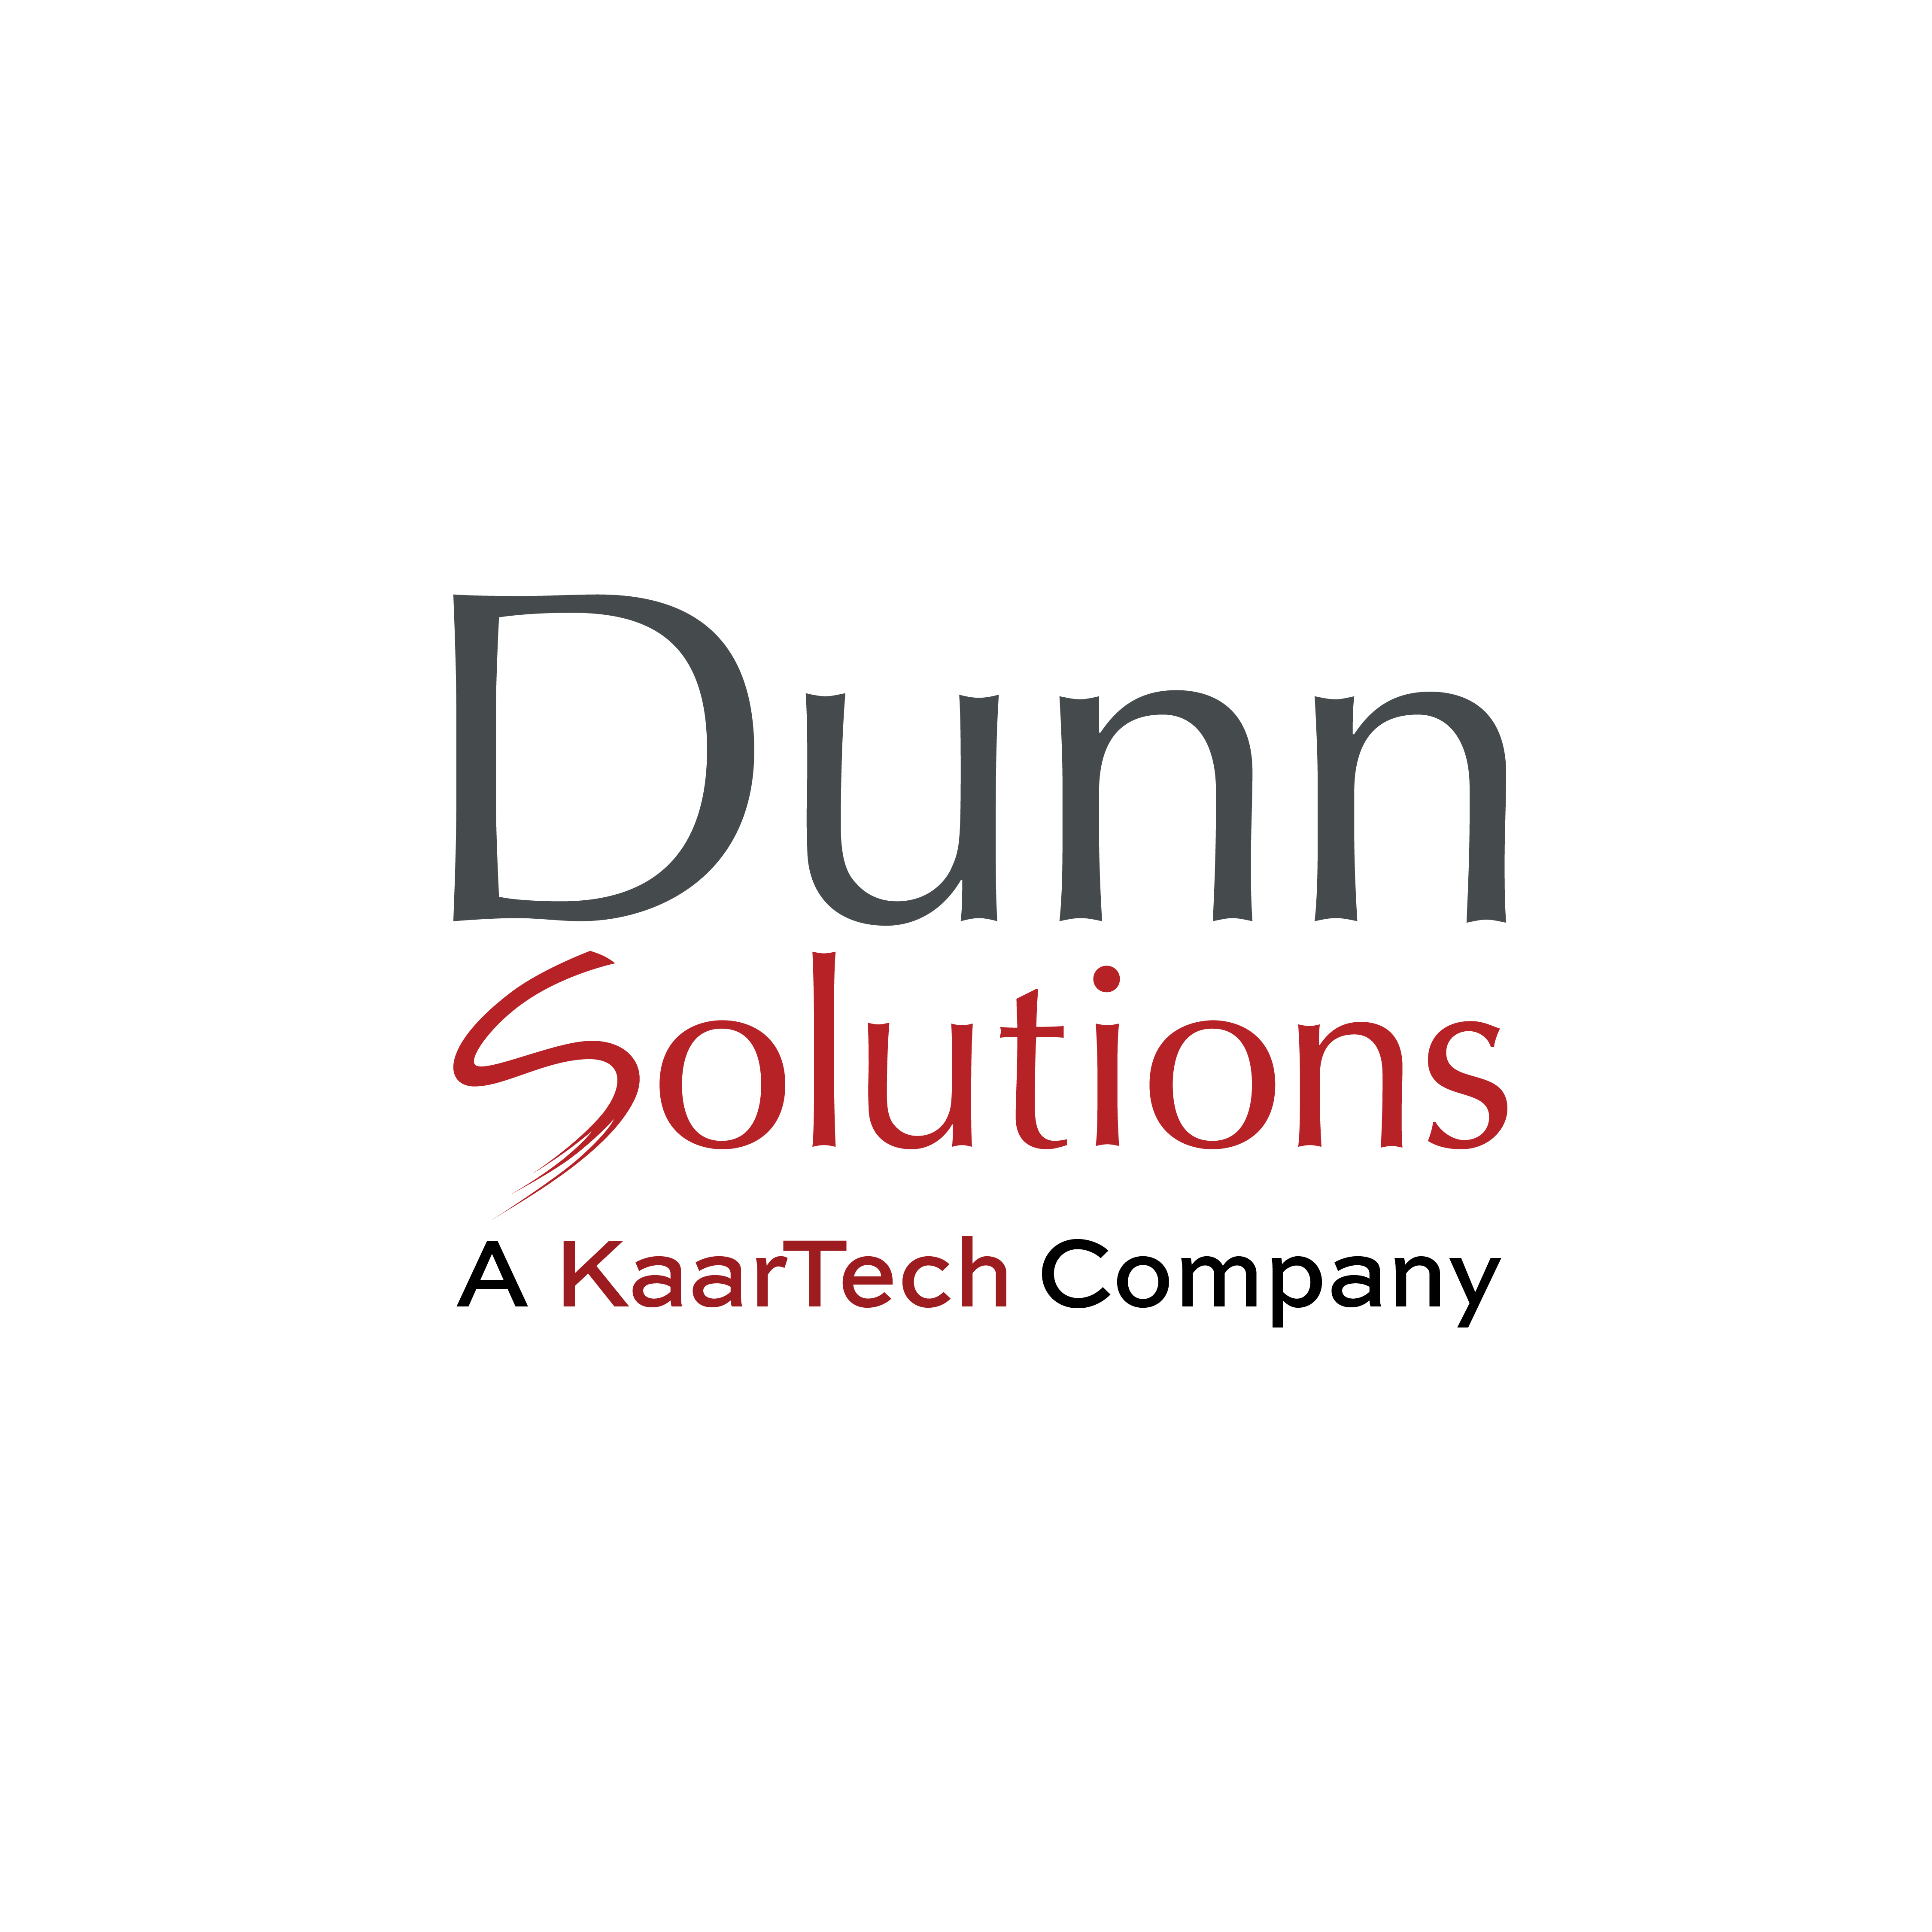 Dunn Solutions, a KaarTech Company